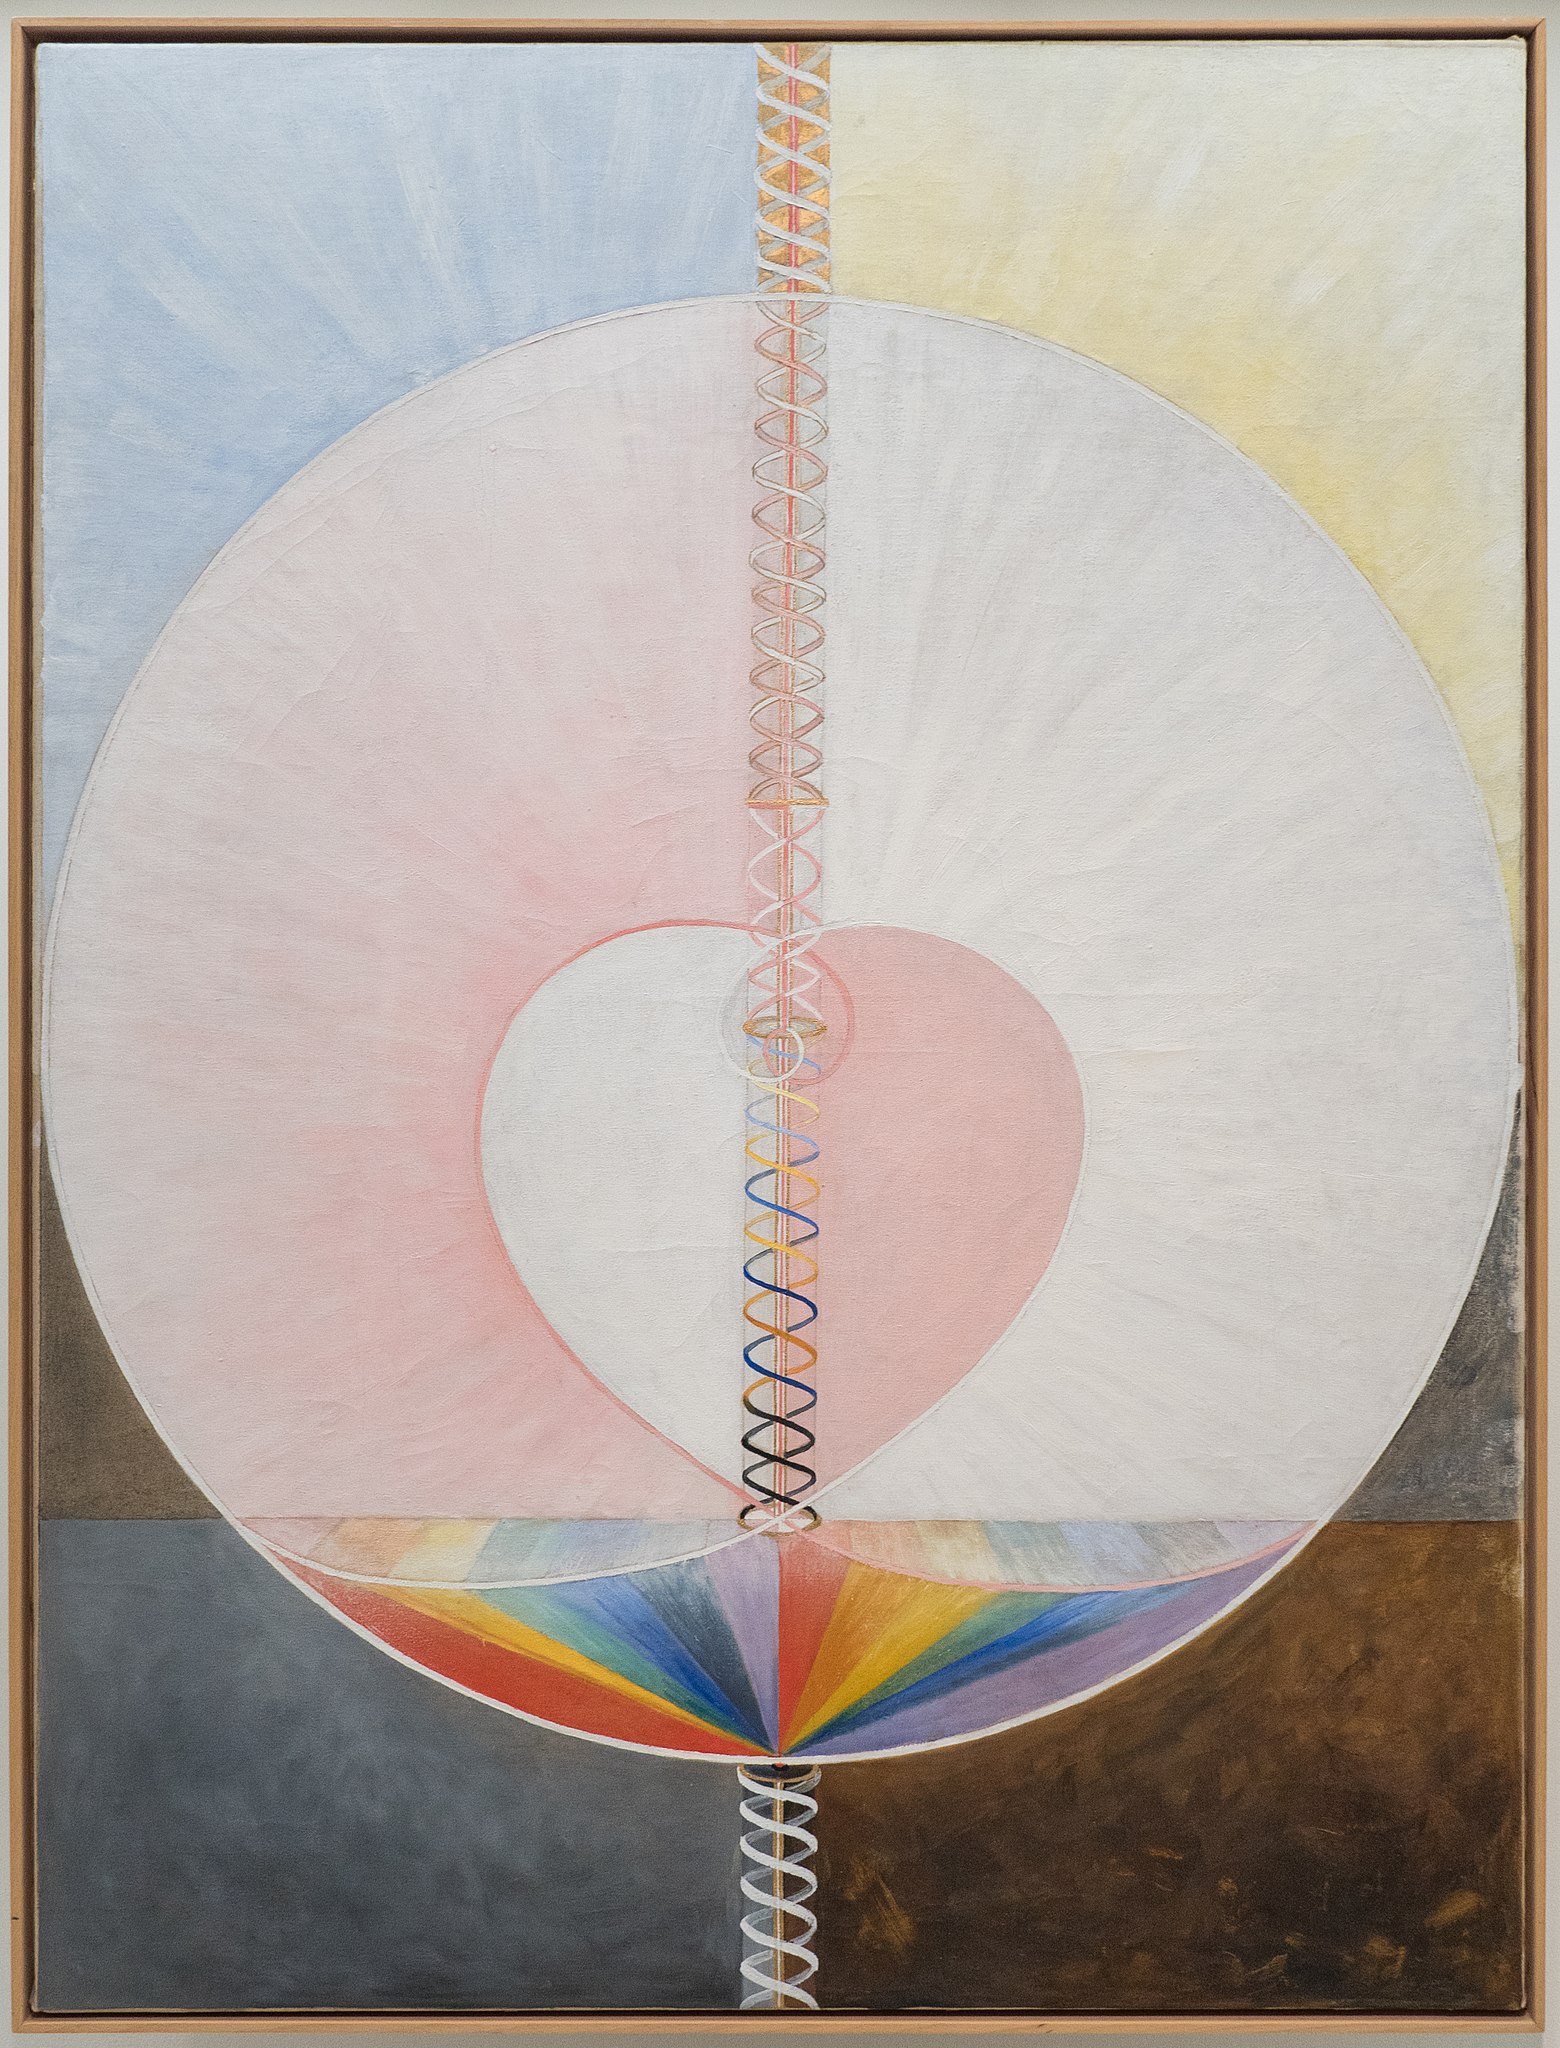 Groupe IX/UW, n°25, La Colombe, n°1 by Hilma af Klint - 1915 - 114,3 x 149,86 cm 